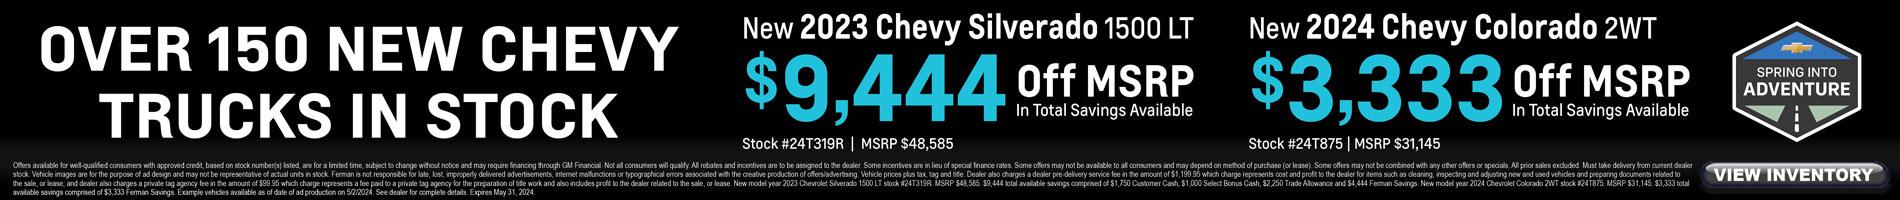 May Truck Savings on over 150 New Silverado and Colorado